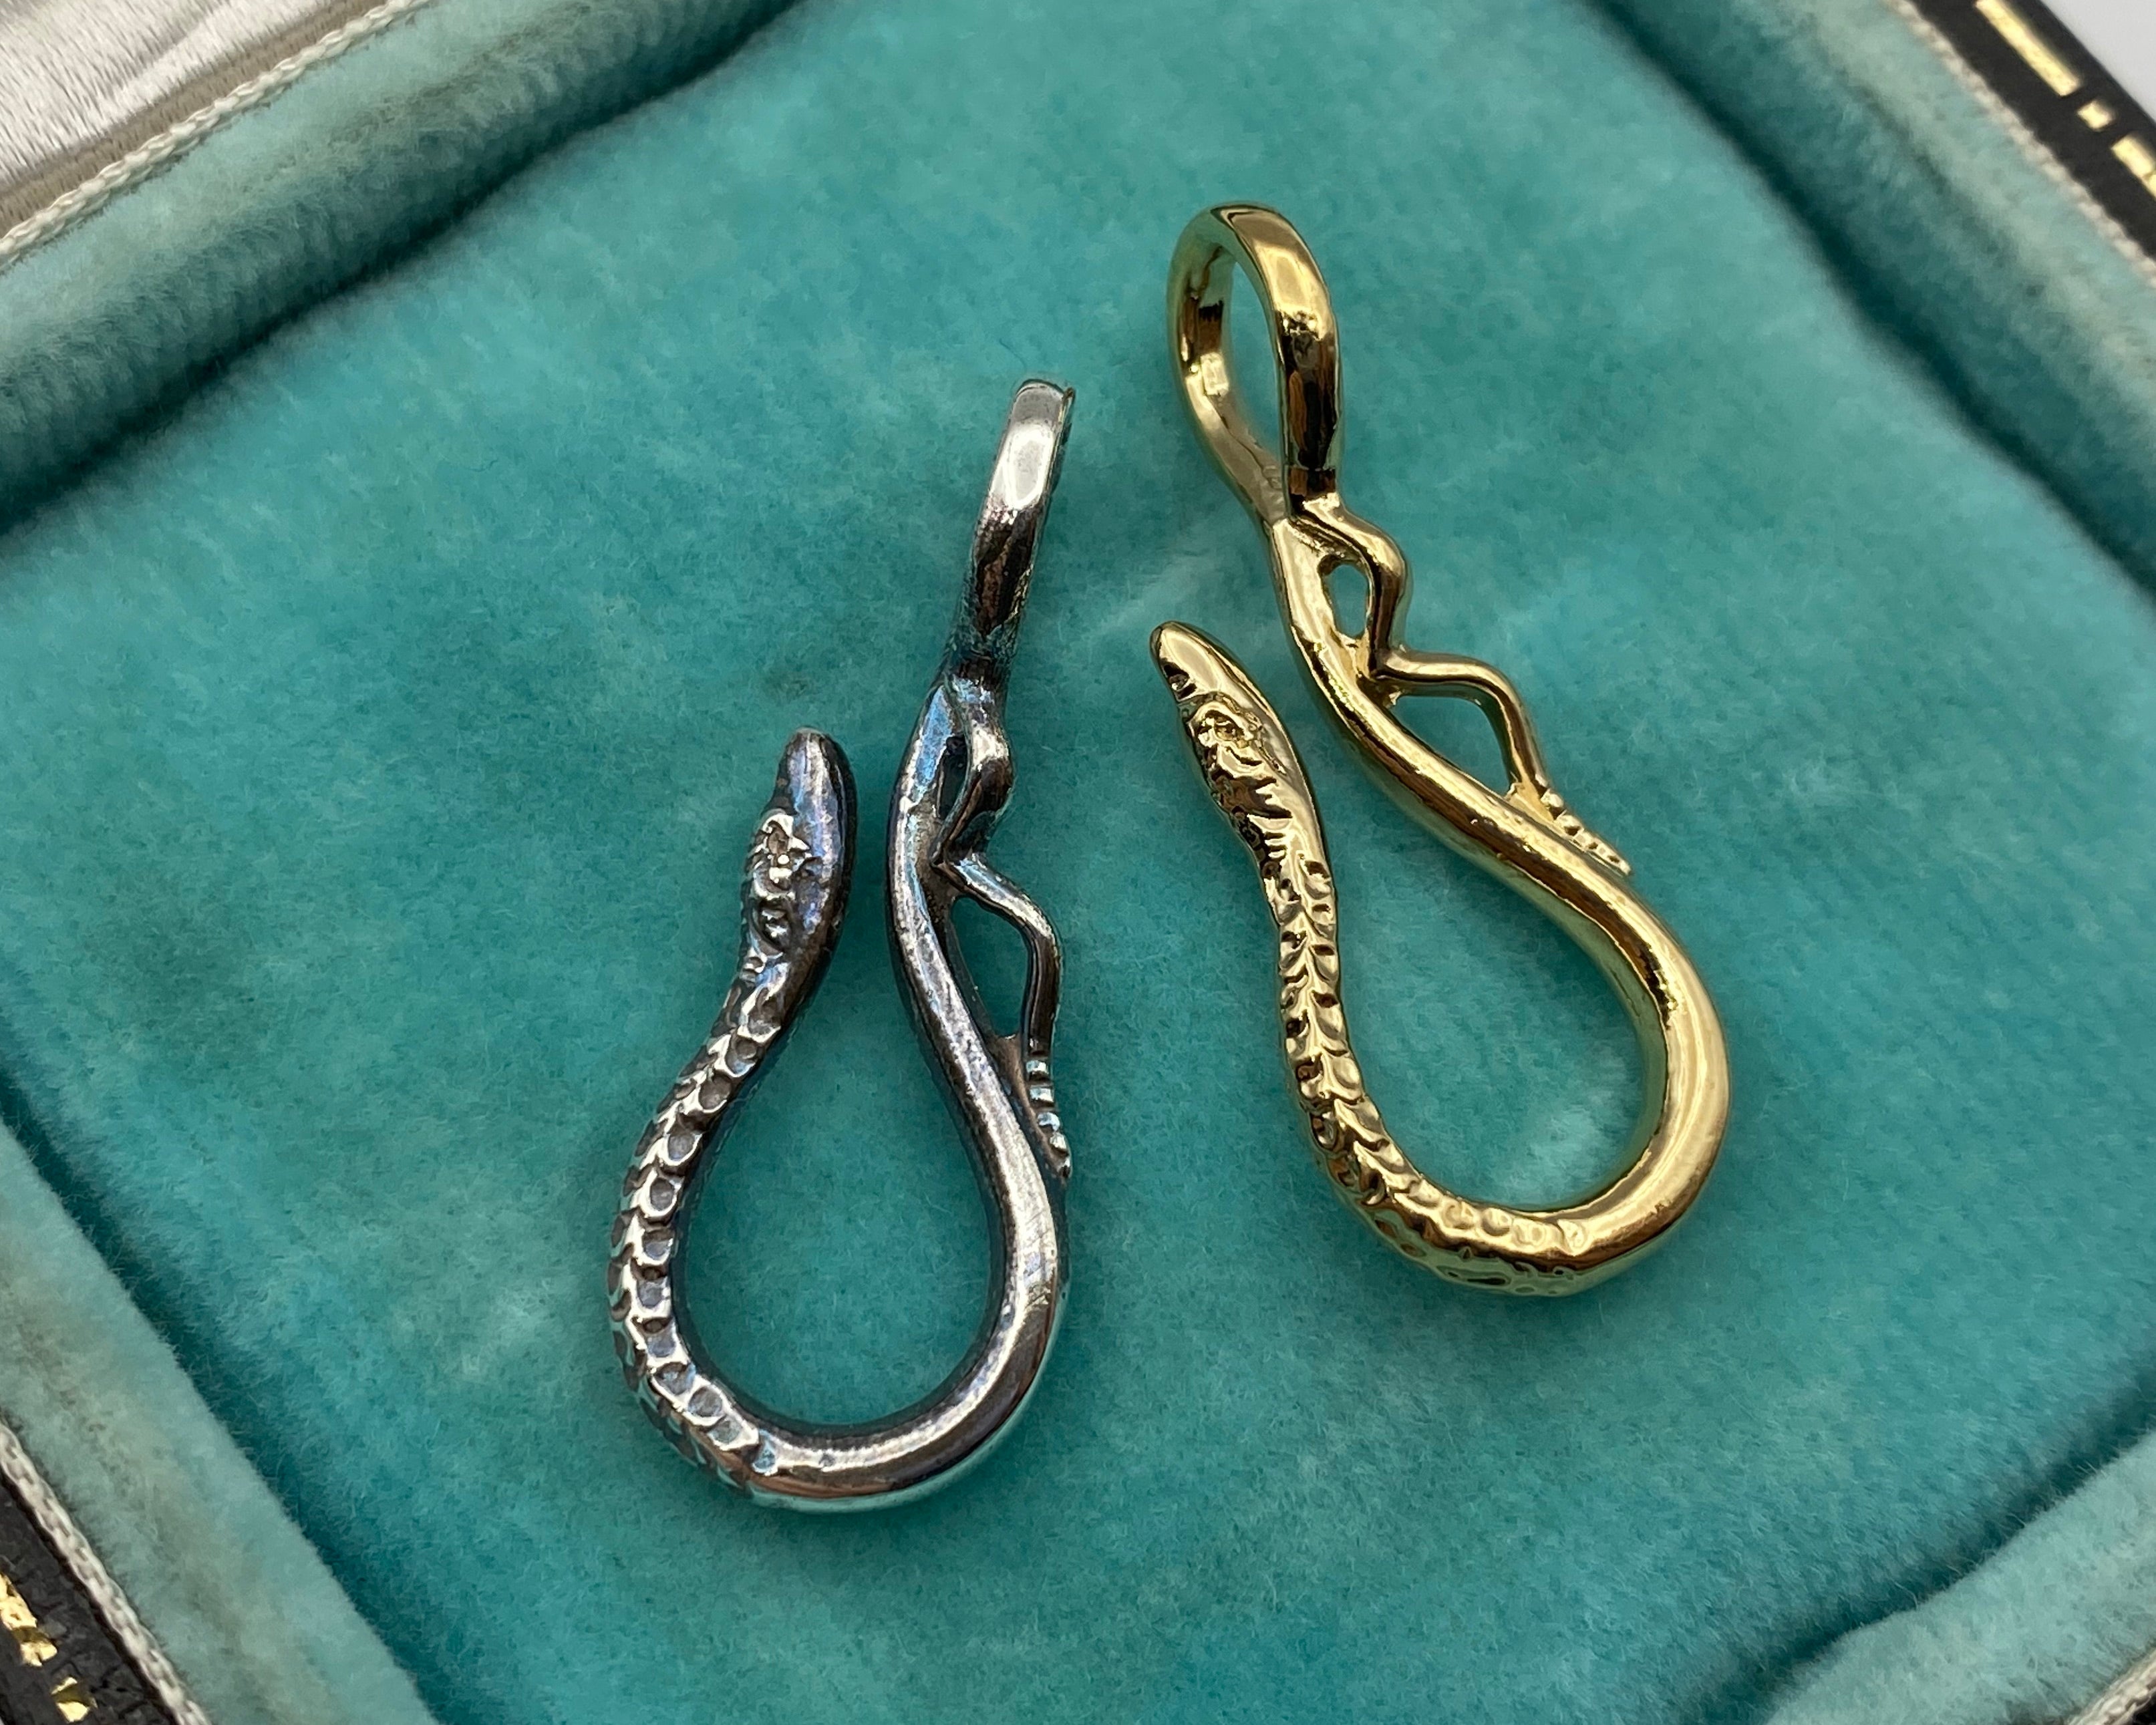 jewelry hook - silver or gold serpent hook - snake hook - charm